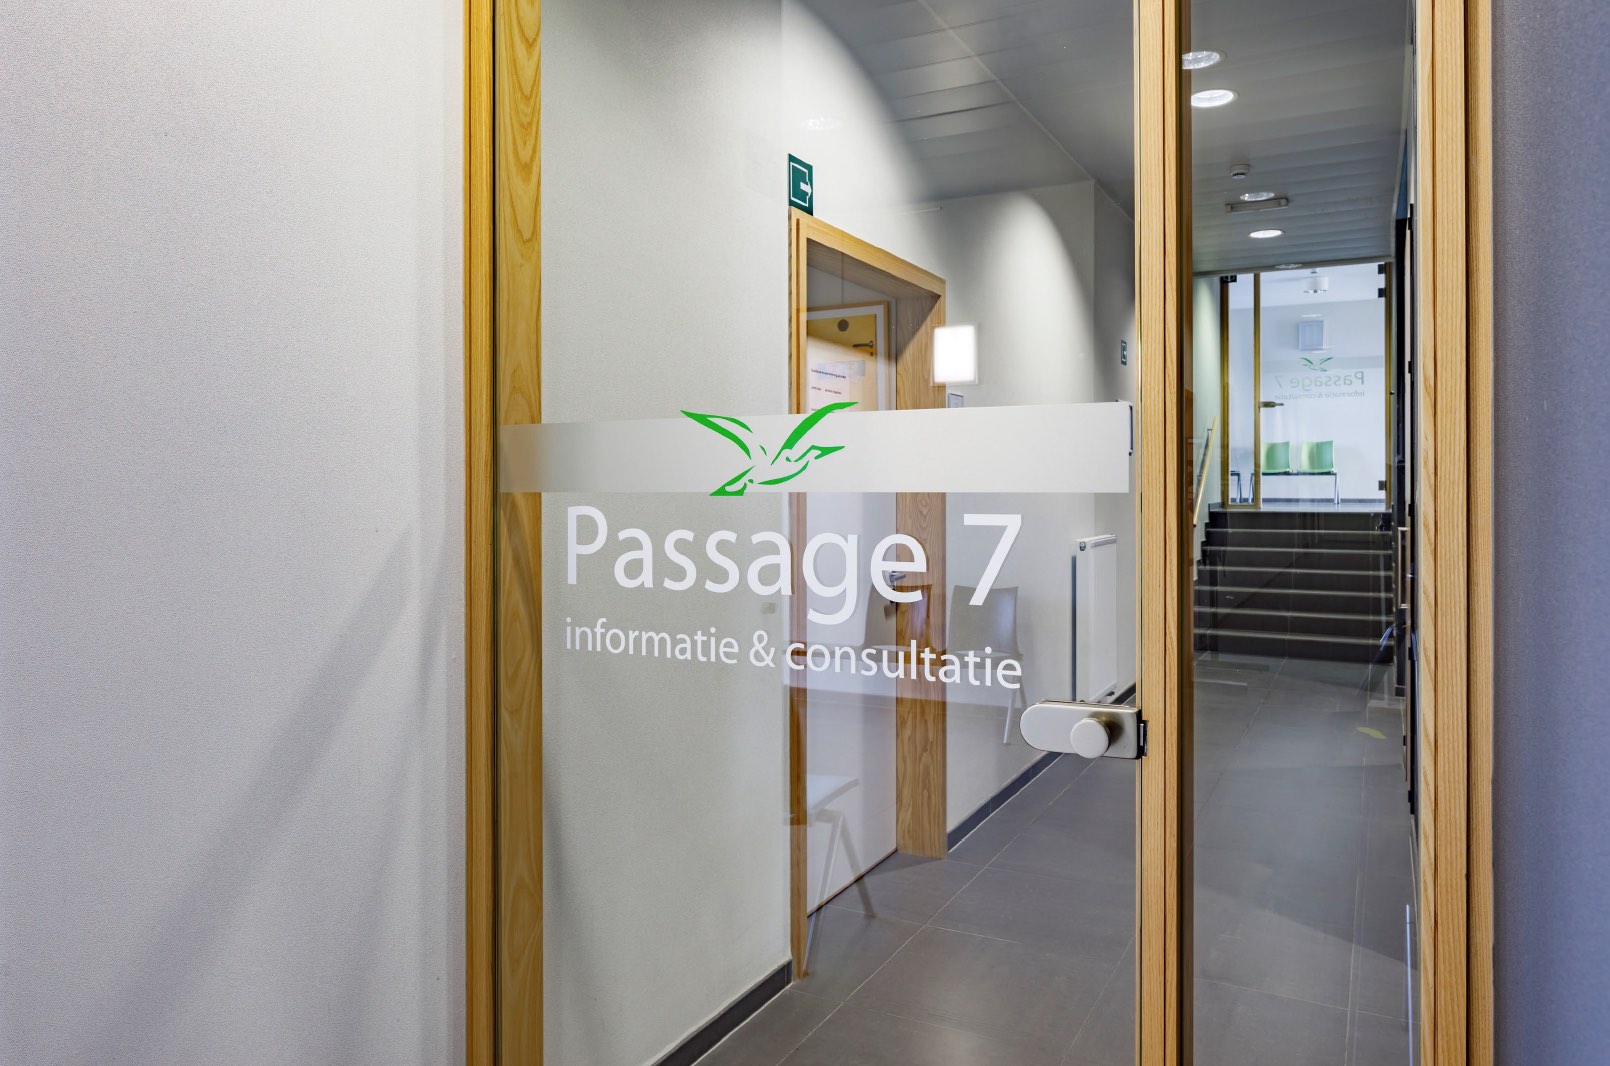 GGZ GPN Vlaamse Ardennen poliklinische consultaties vinden plaats in Passage 7